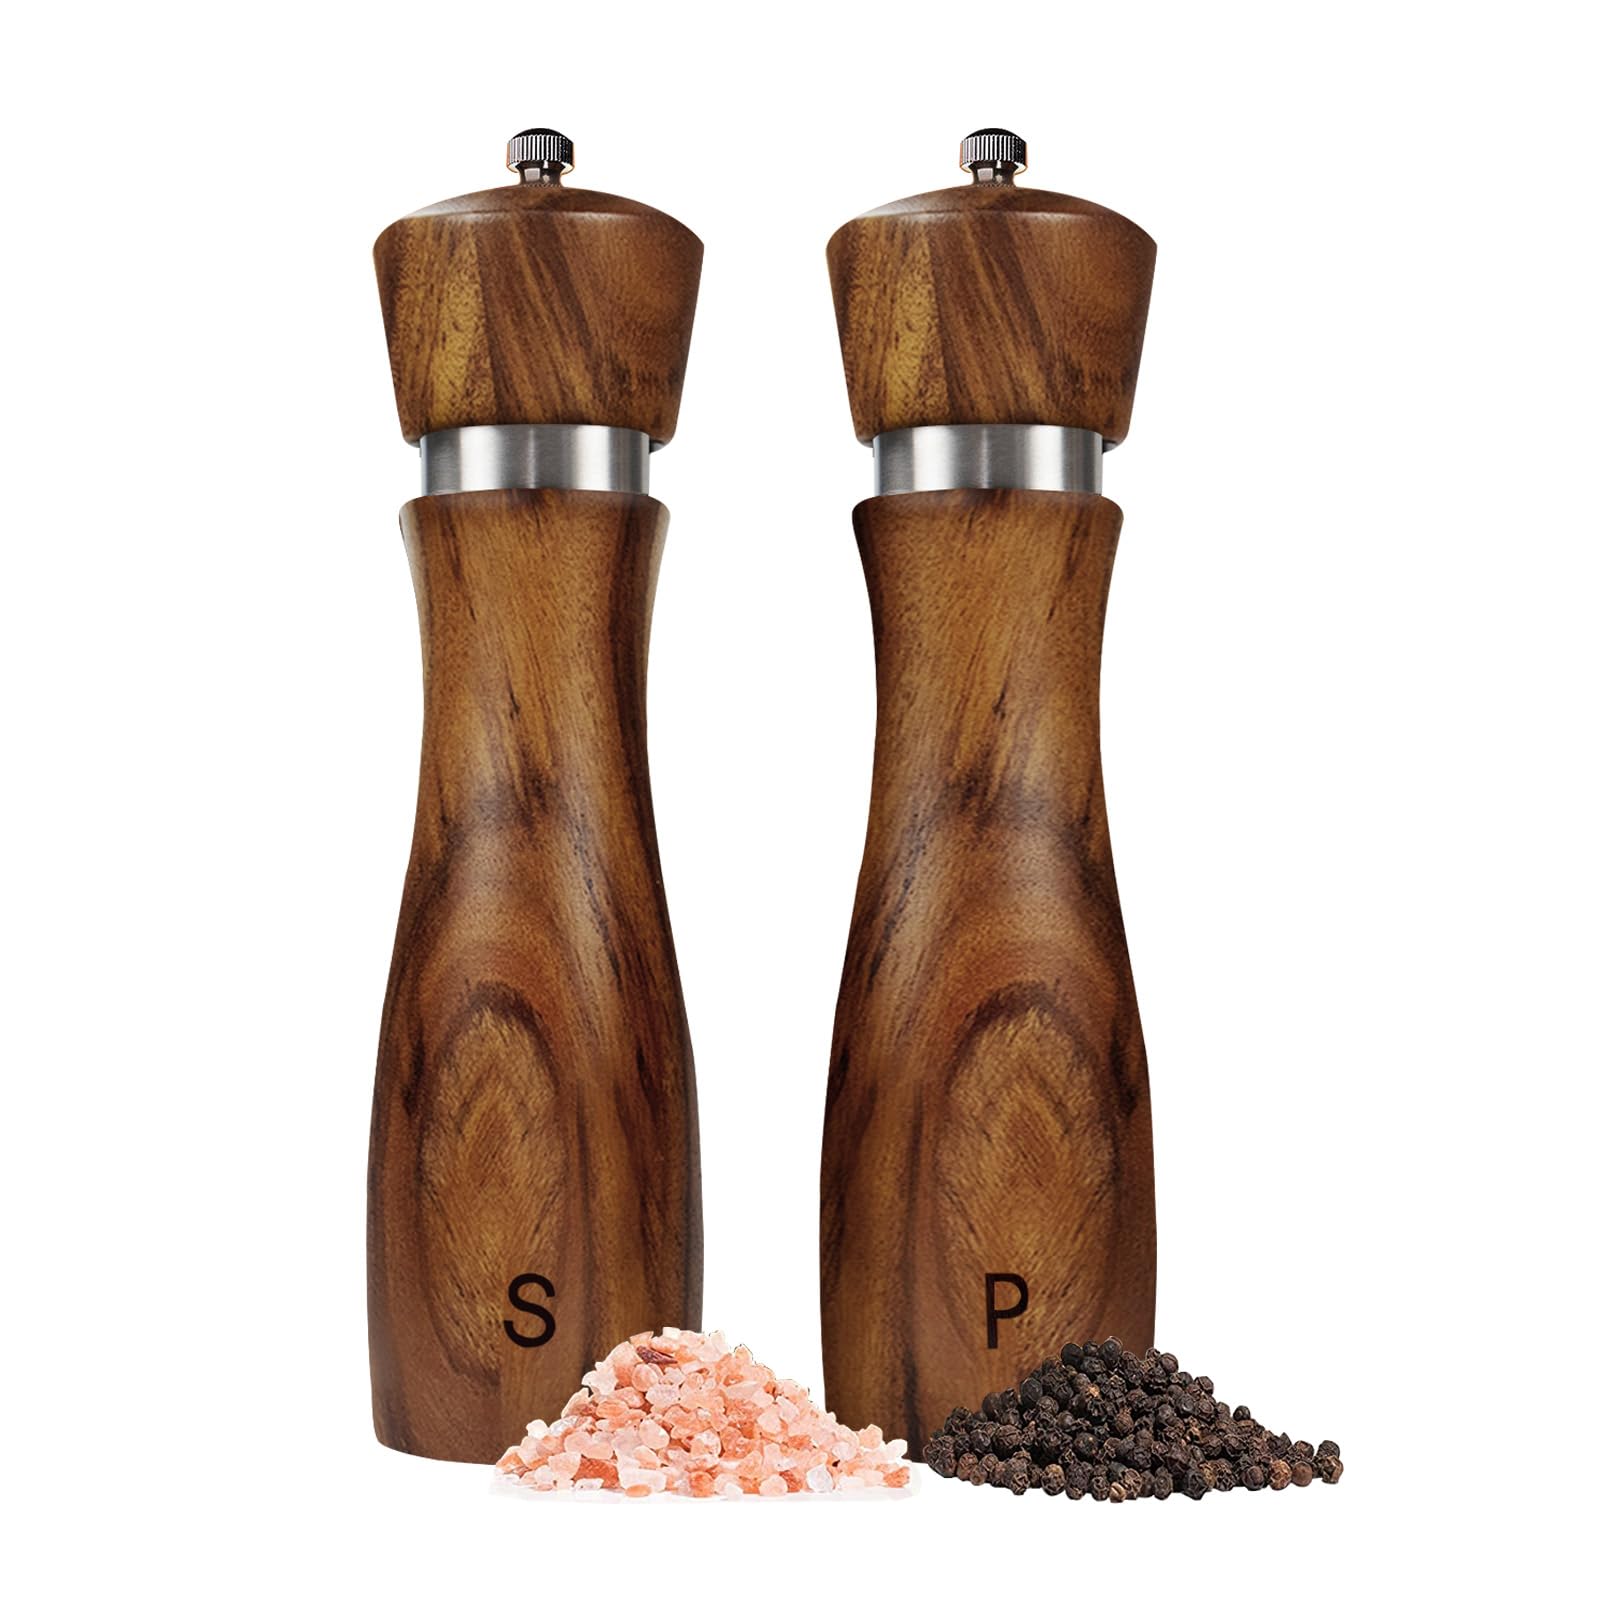 Haomacro Salt and Pepper Grinder Set